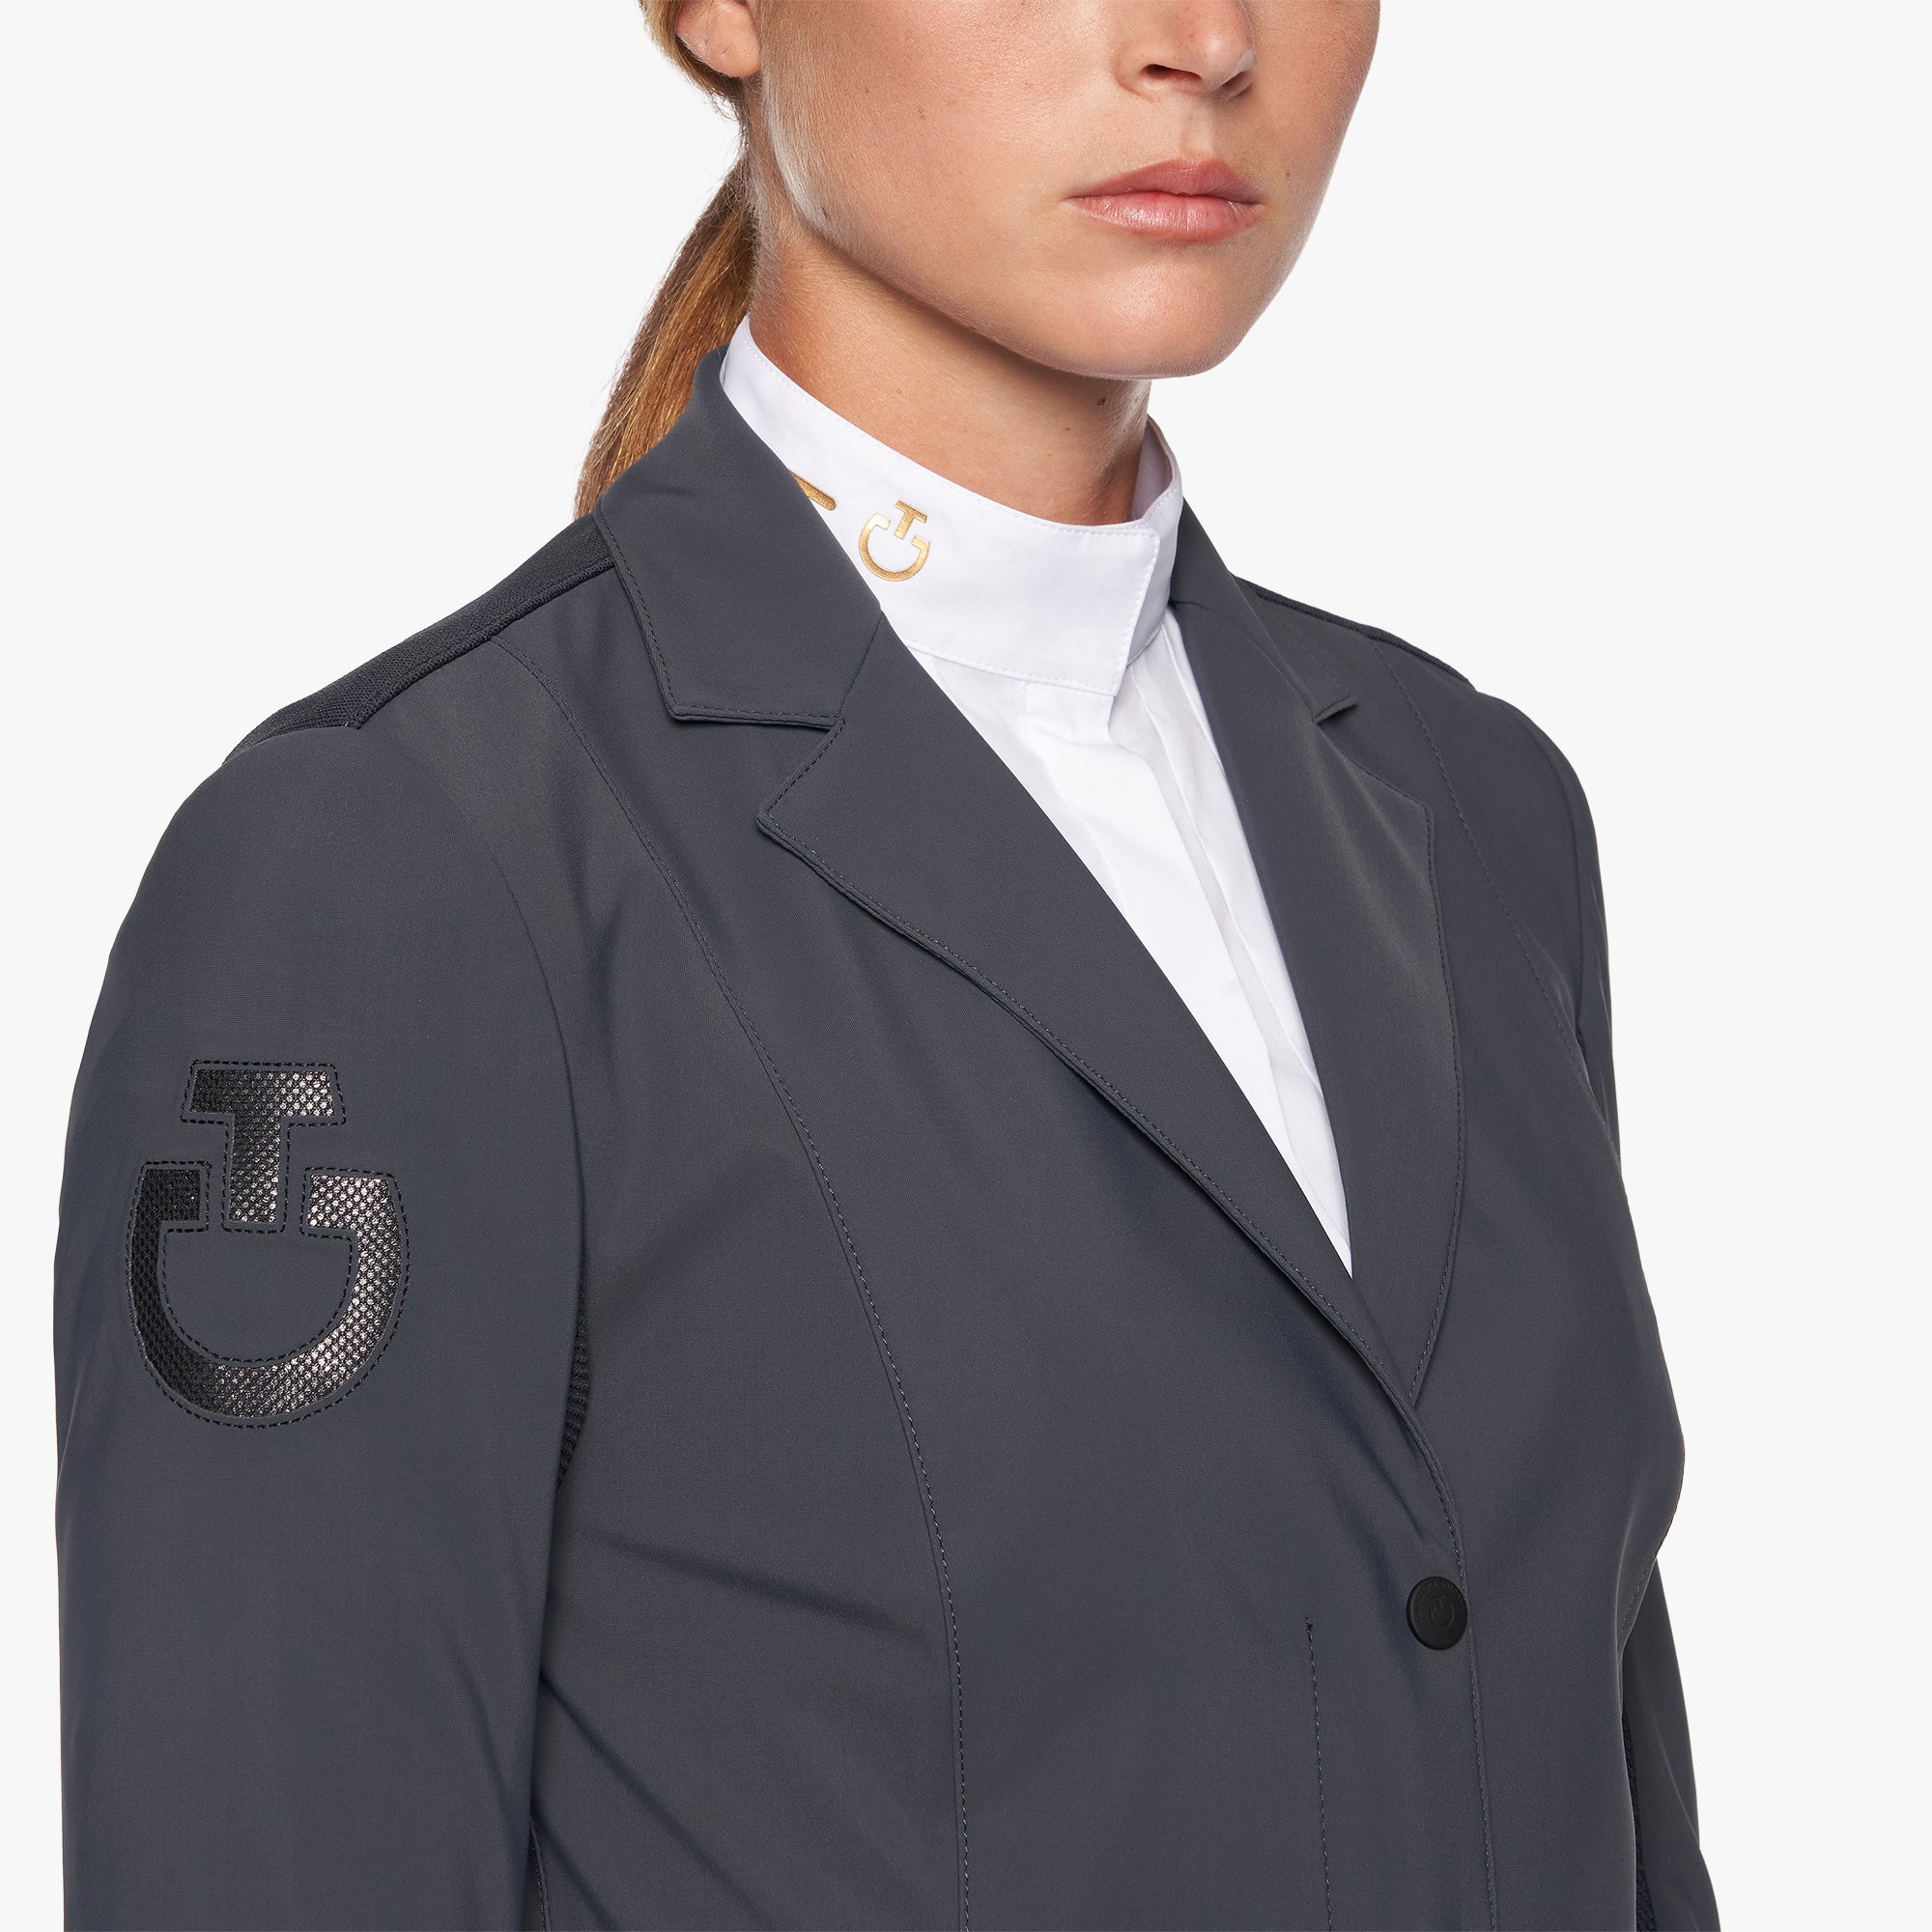 product shot image of the Ladies Revo Light Tech Knit Riding Jacket - Grey